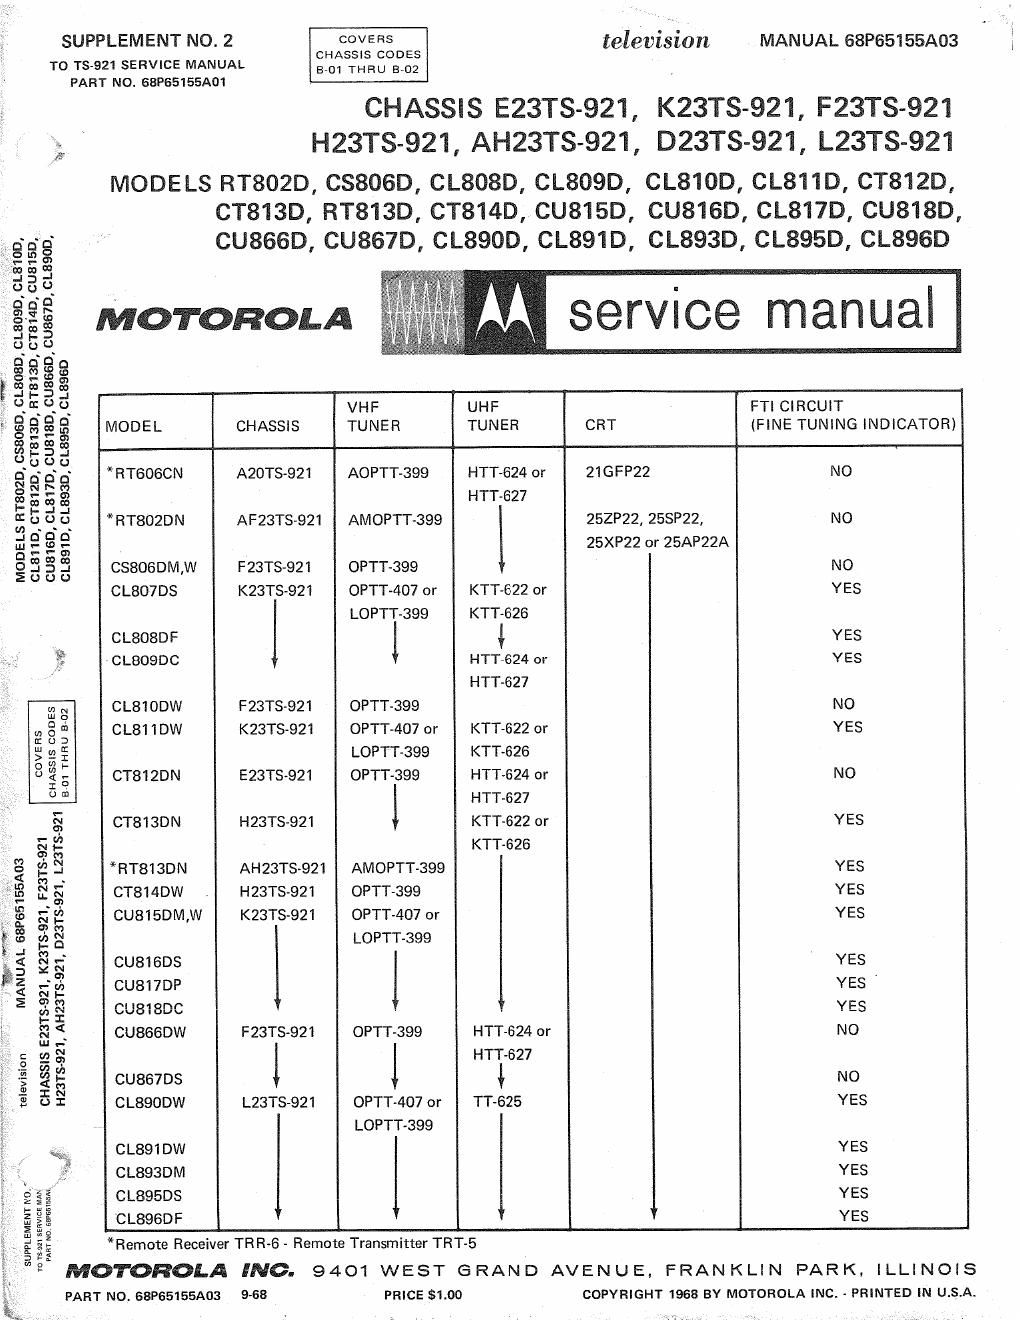 motorola cl 891 d service manual